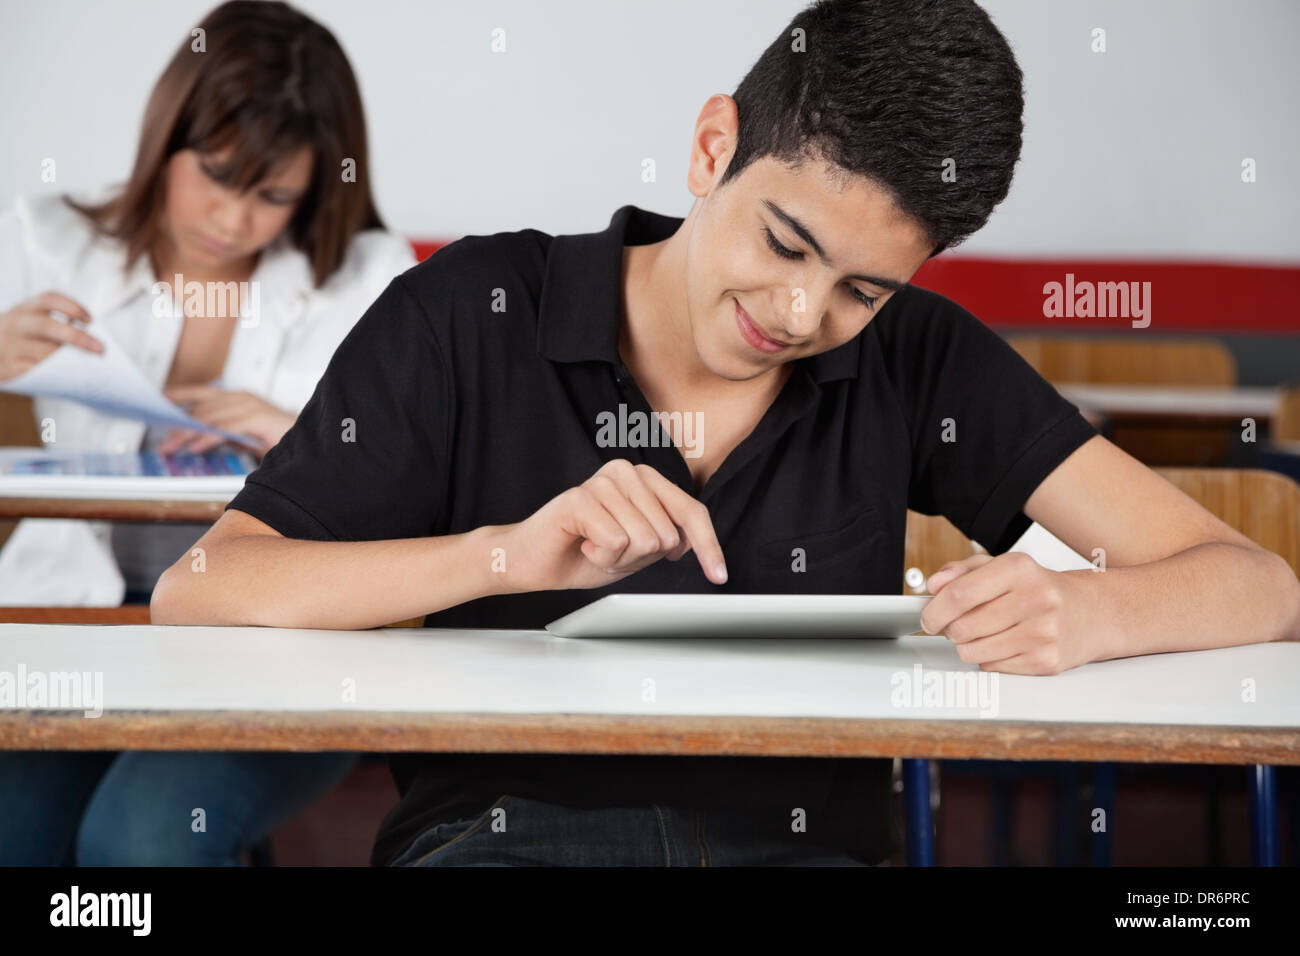 High School Student Using Digital Tablet At Desk Stock Photo